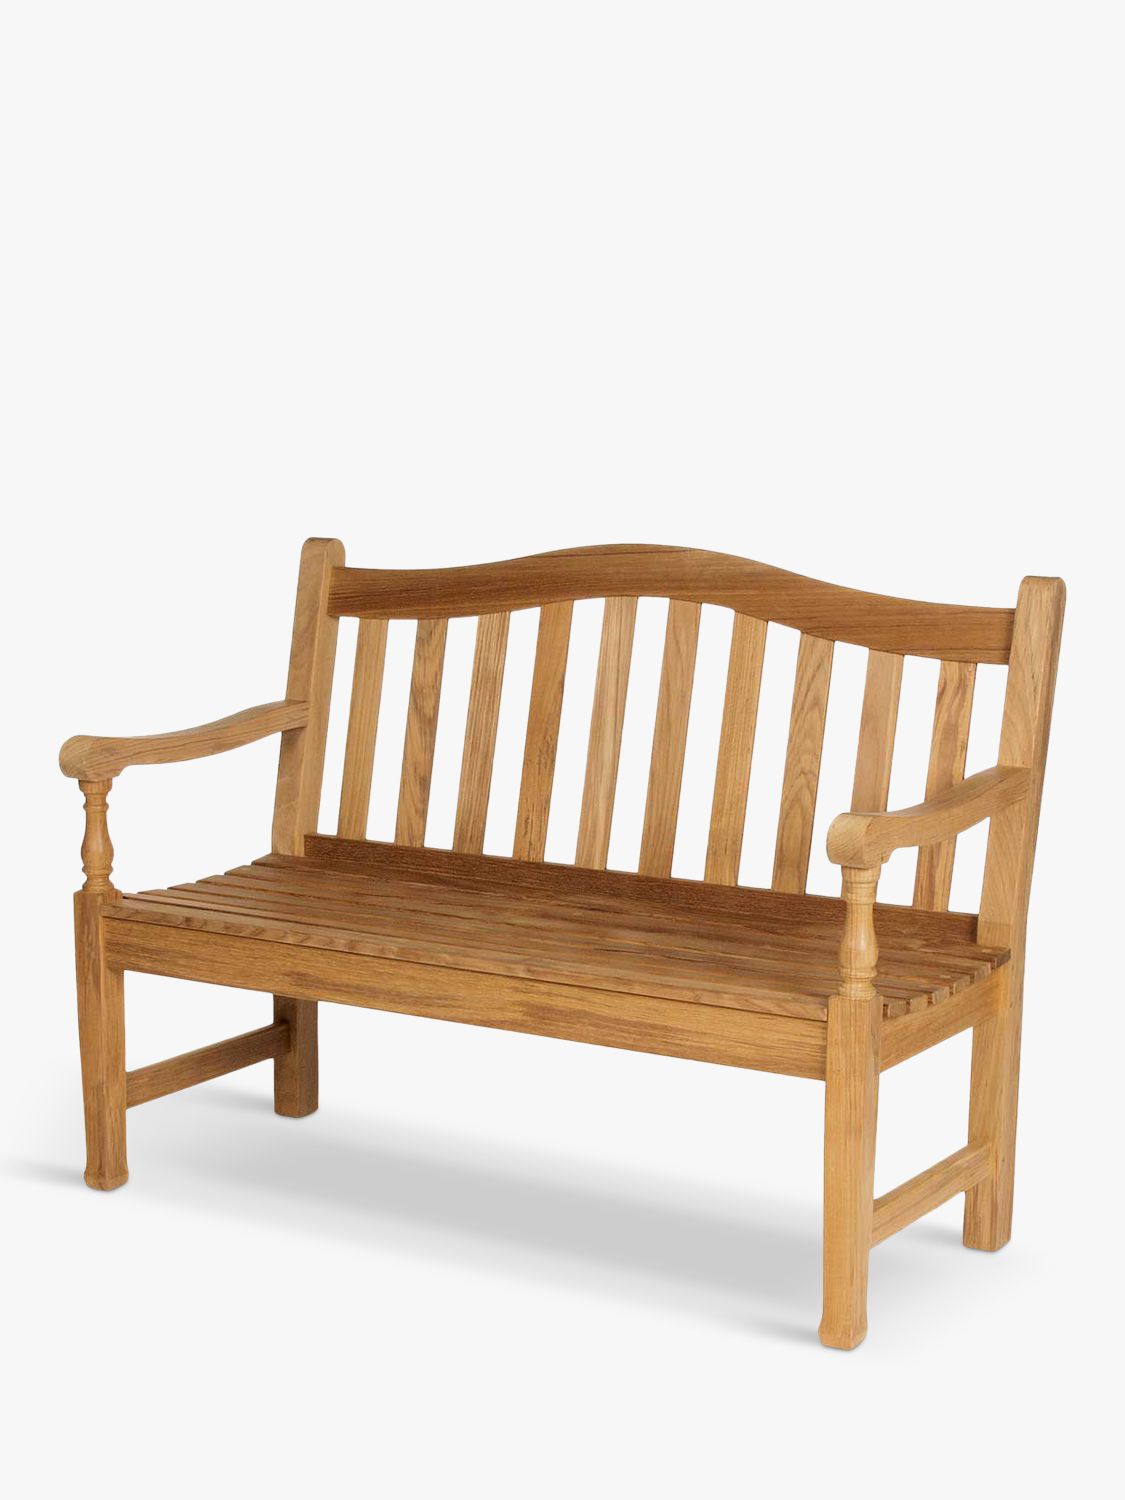 Photo of Barlow tyrie waveney 2-seat teak wood garden bench natural